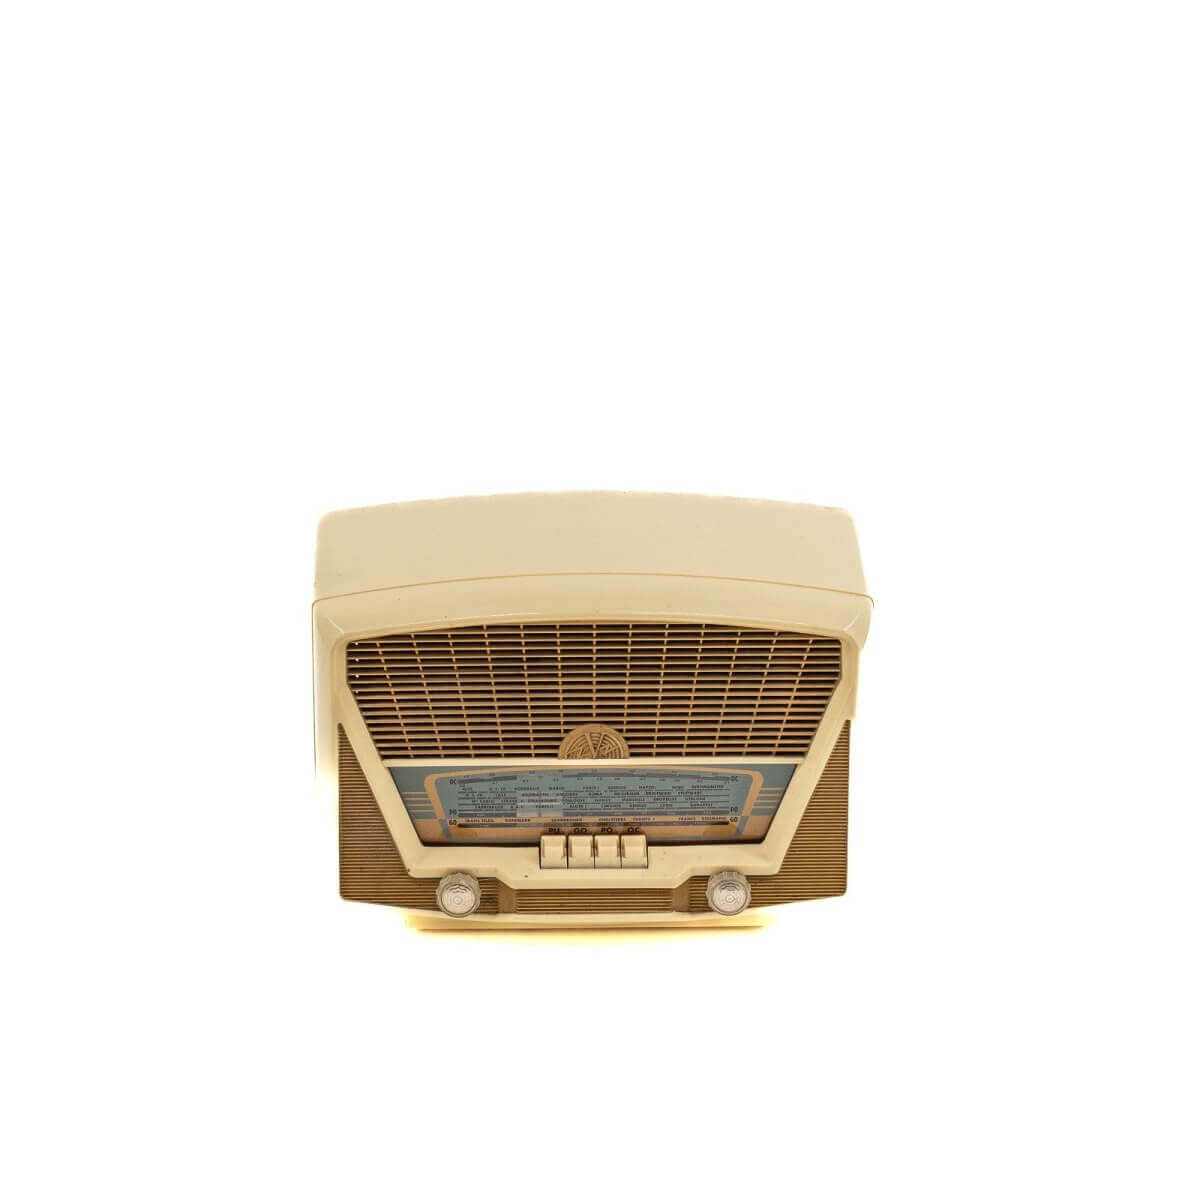 Radio Bluetooth Victoire Vintage 50’S enceinte connectée bluetooth haut de gamme prodige radio vintage design